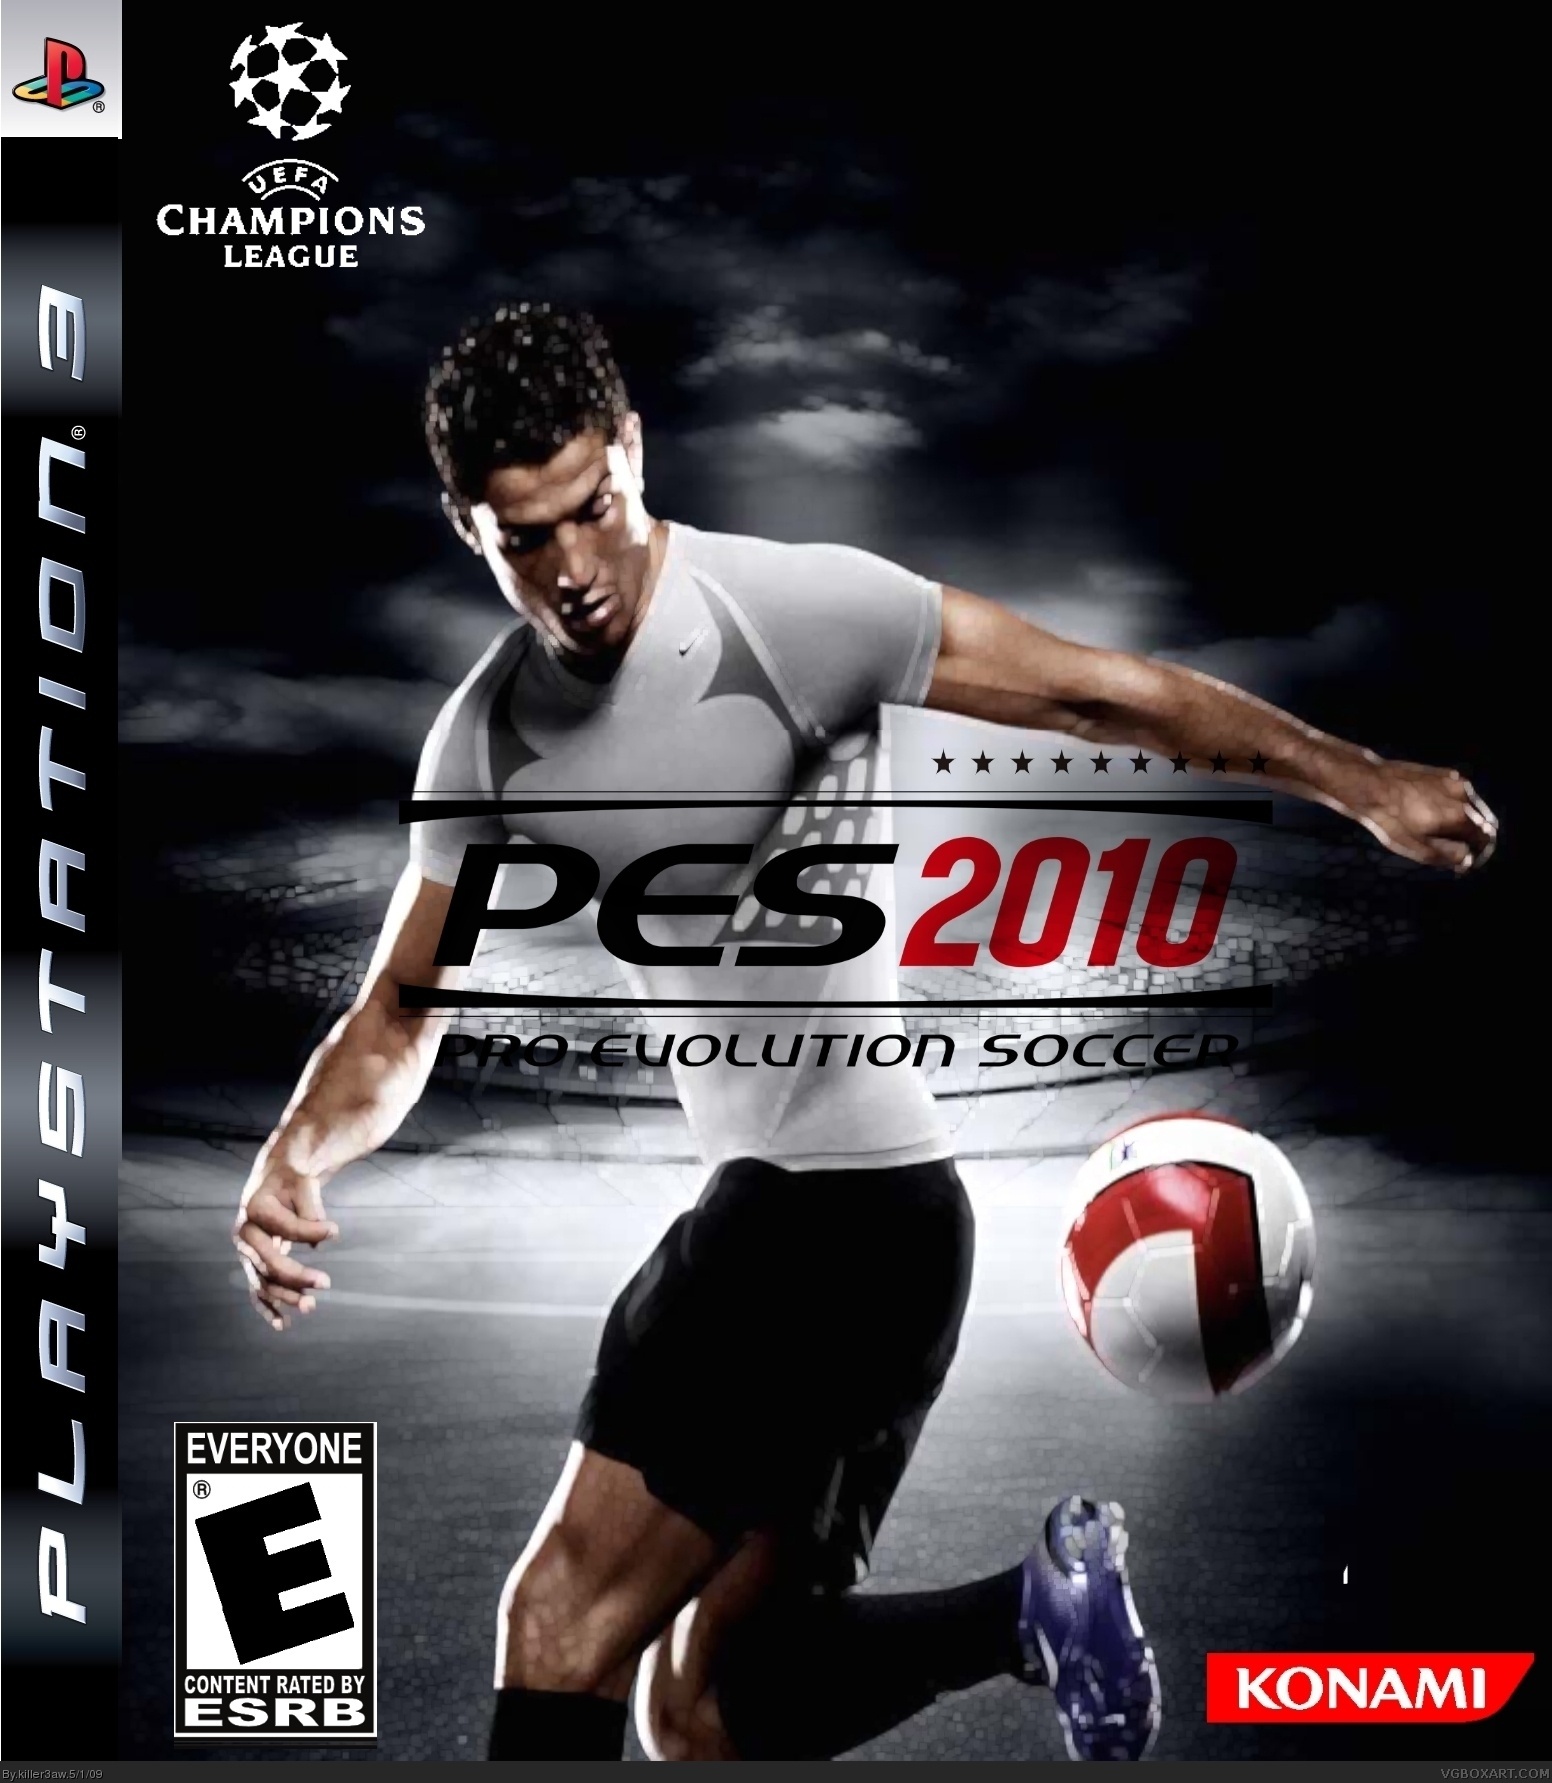 Pro Evolution Soccer 2010 box cover